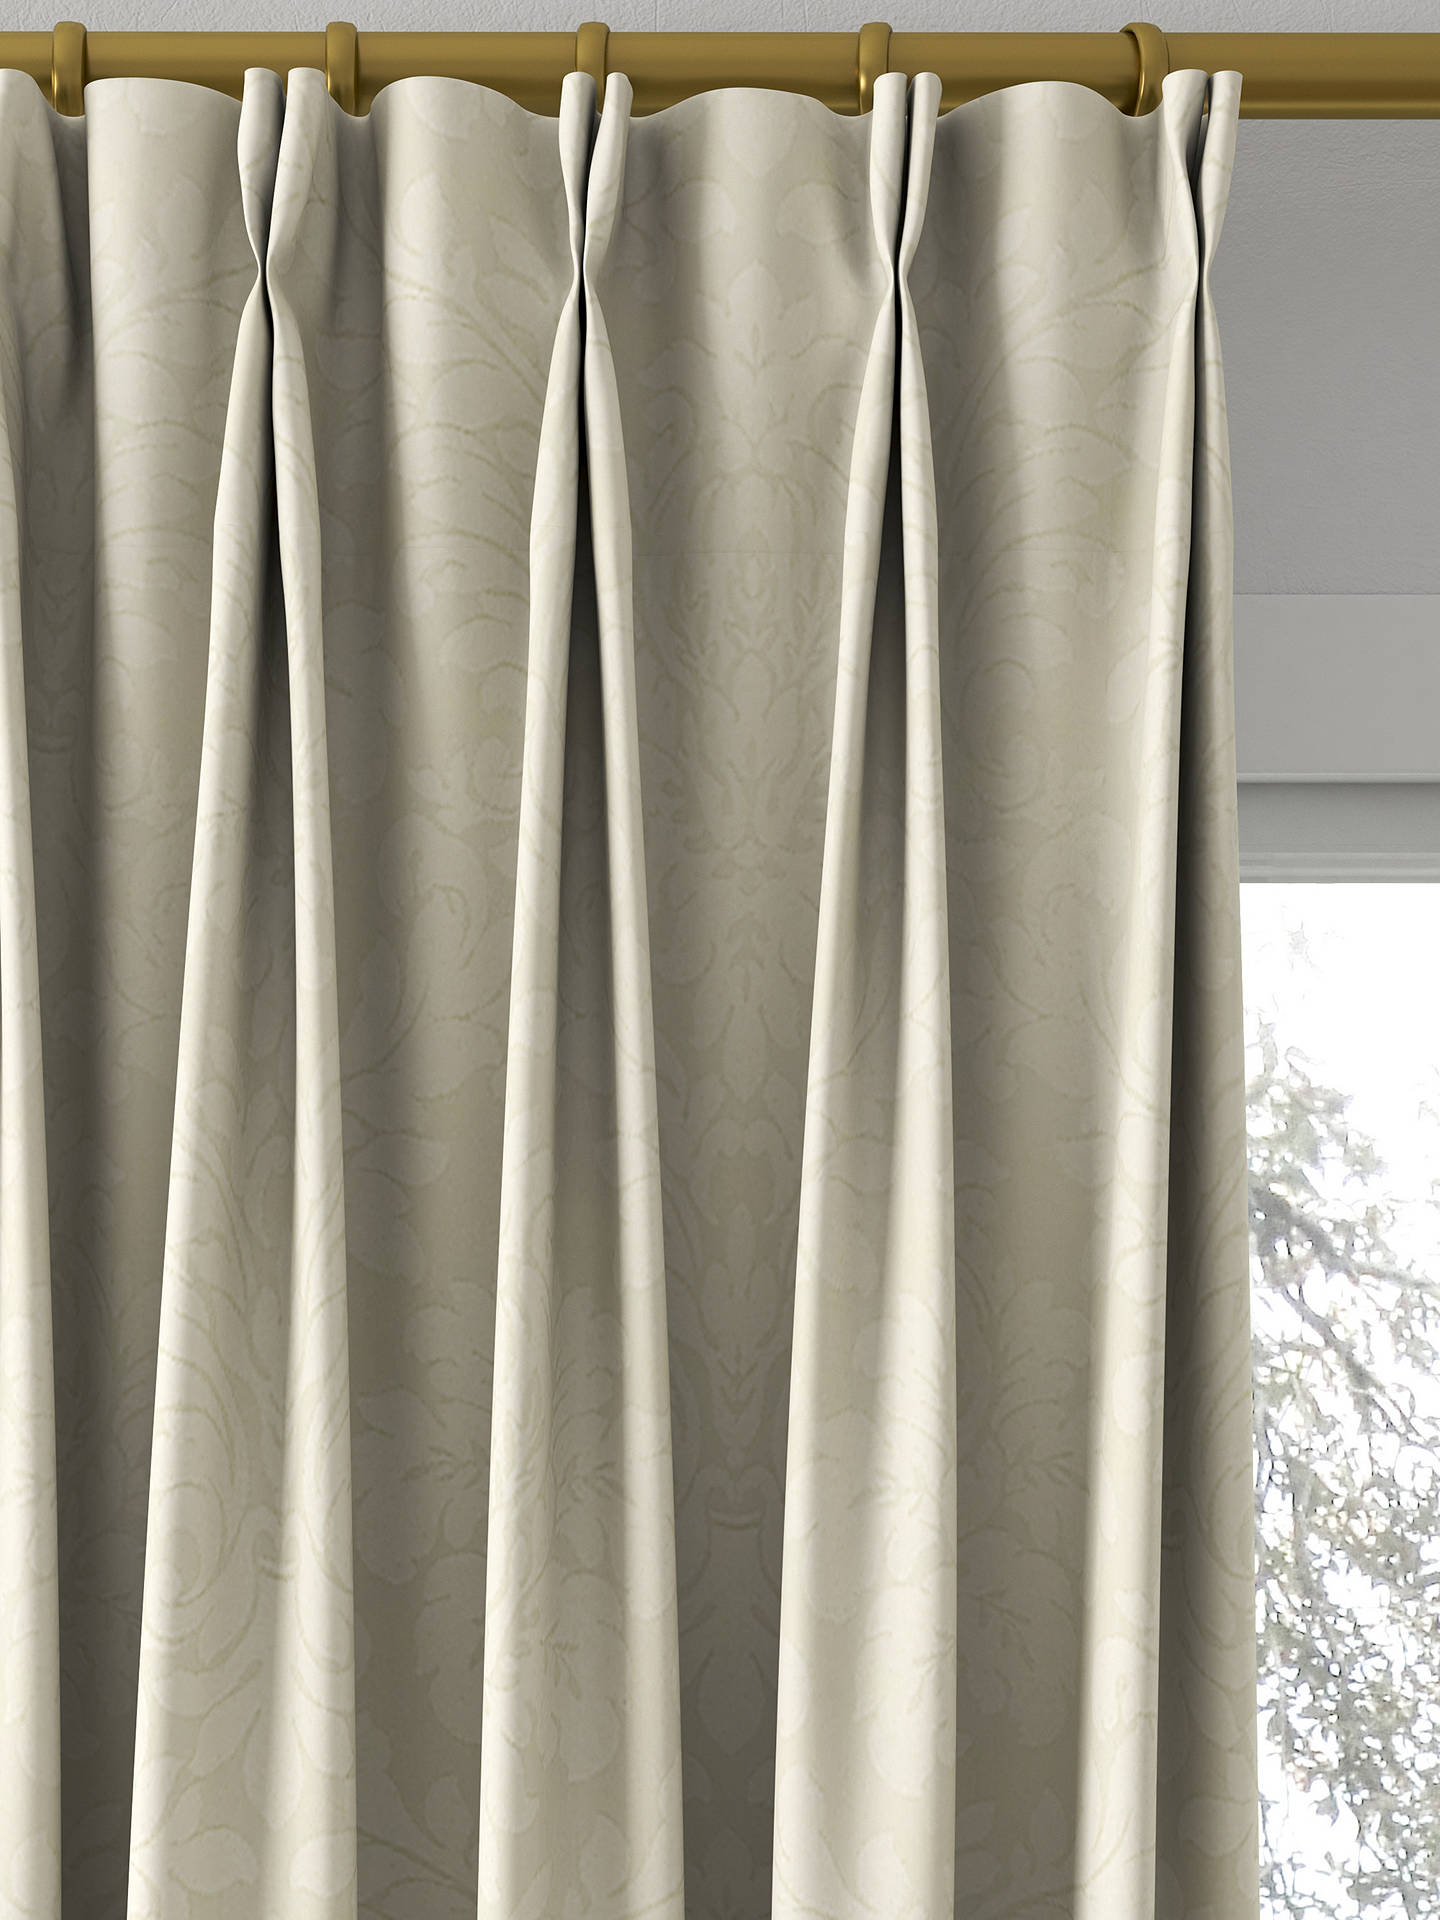 Sanderson Lymington Damask Made to Measure Curtains, Cream